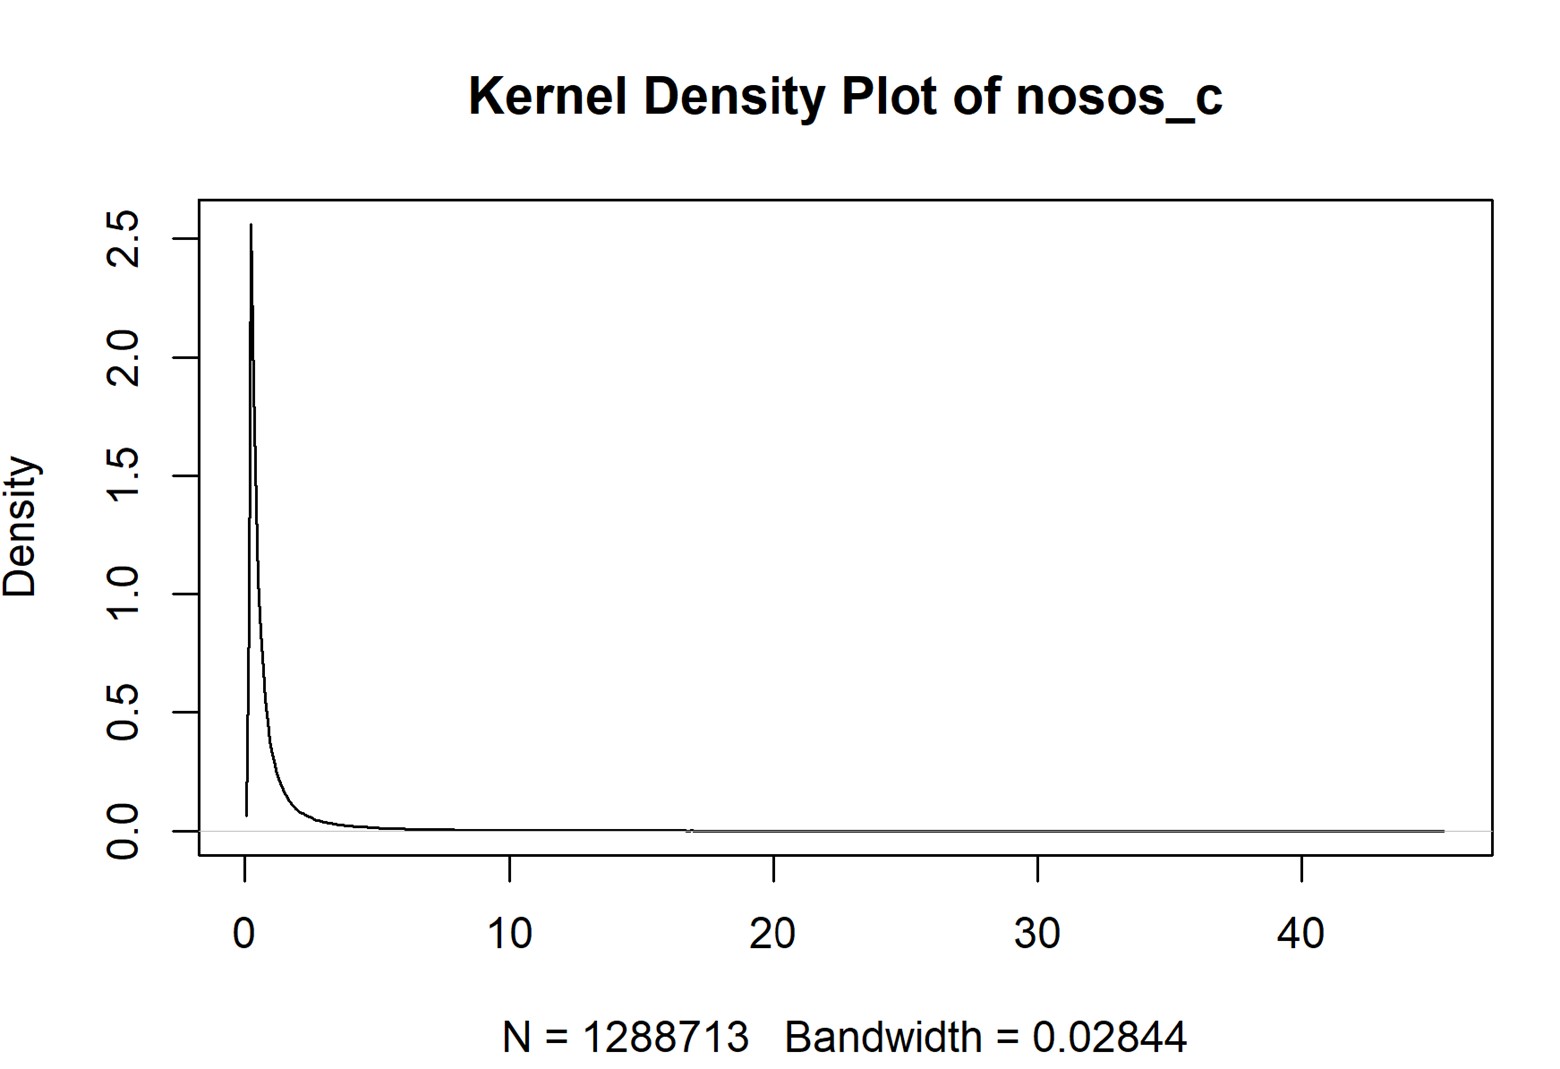 Figure 1: Kernel density plot for concurrent Nosos risk scores